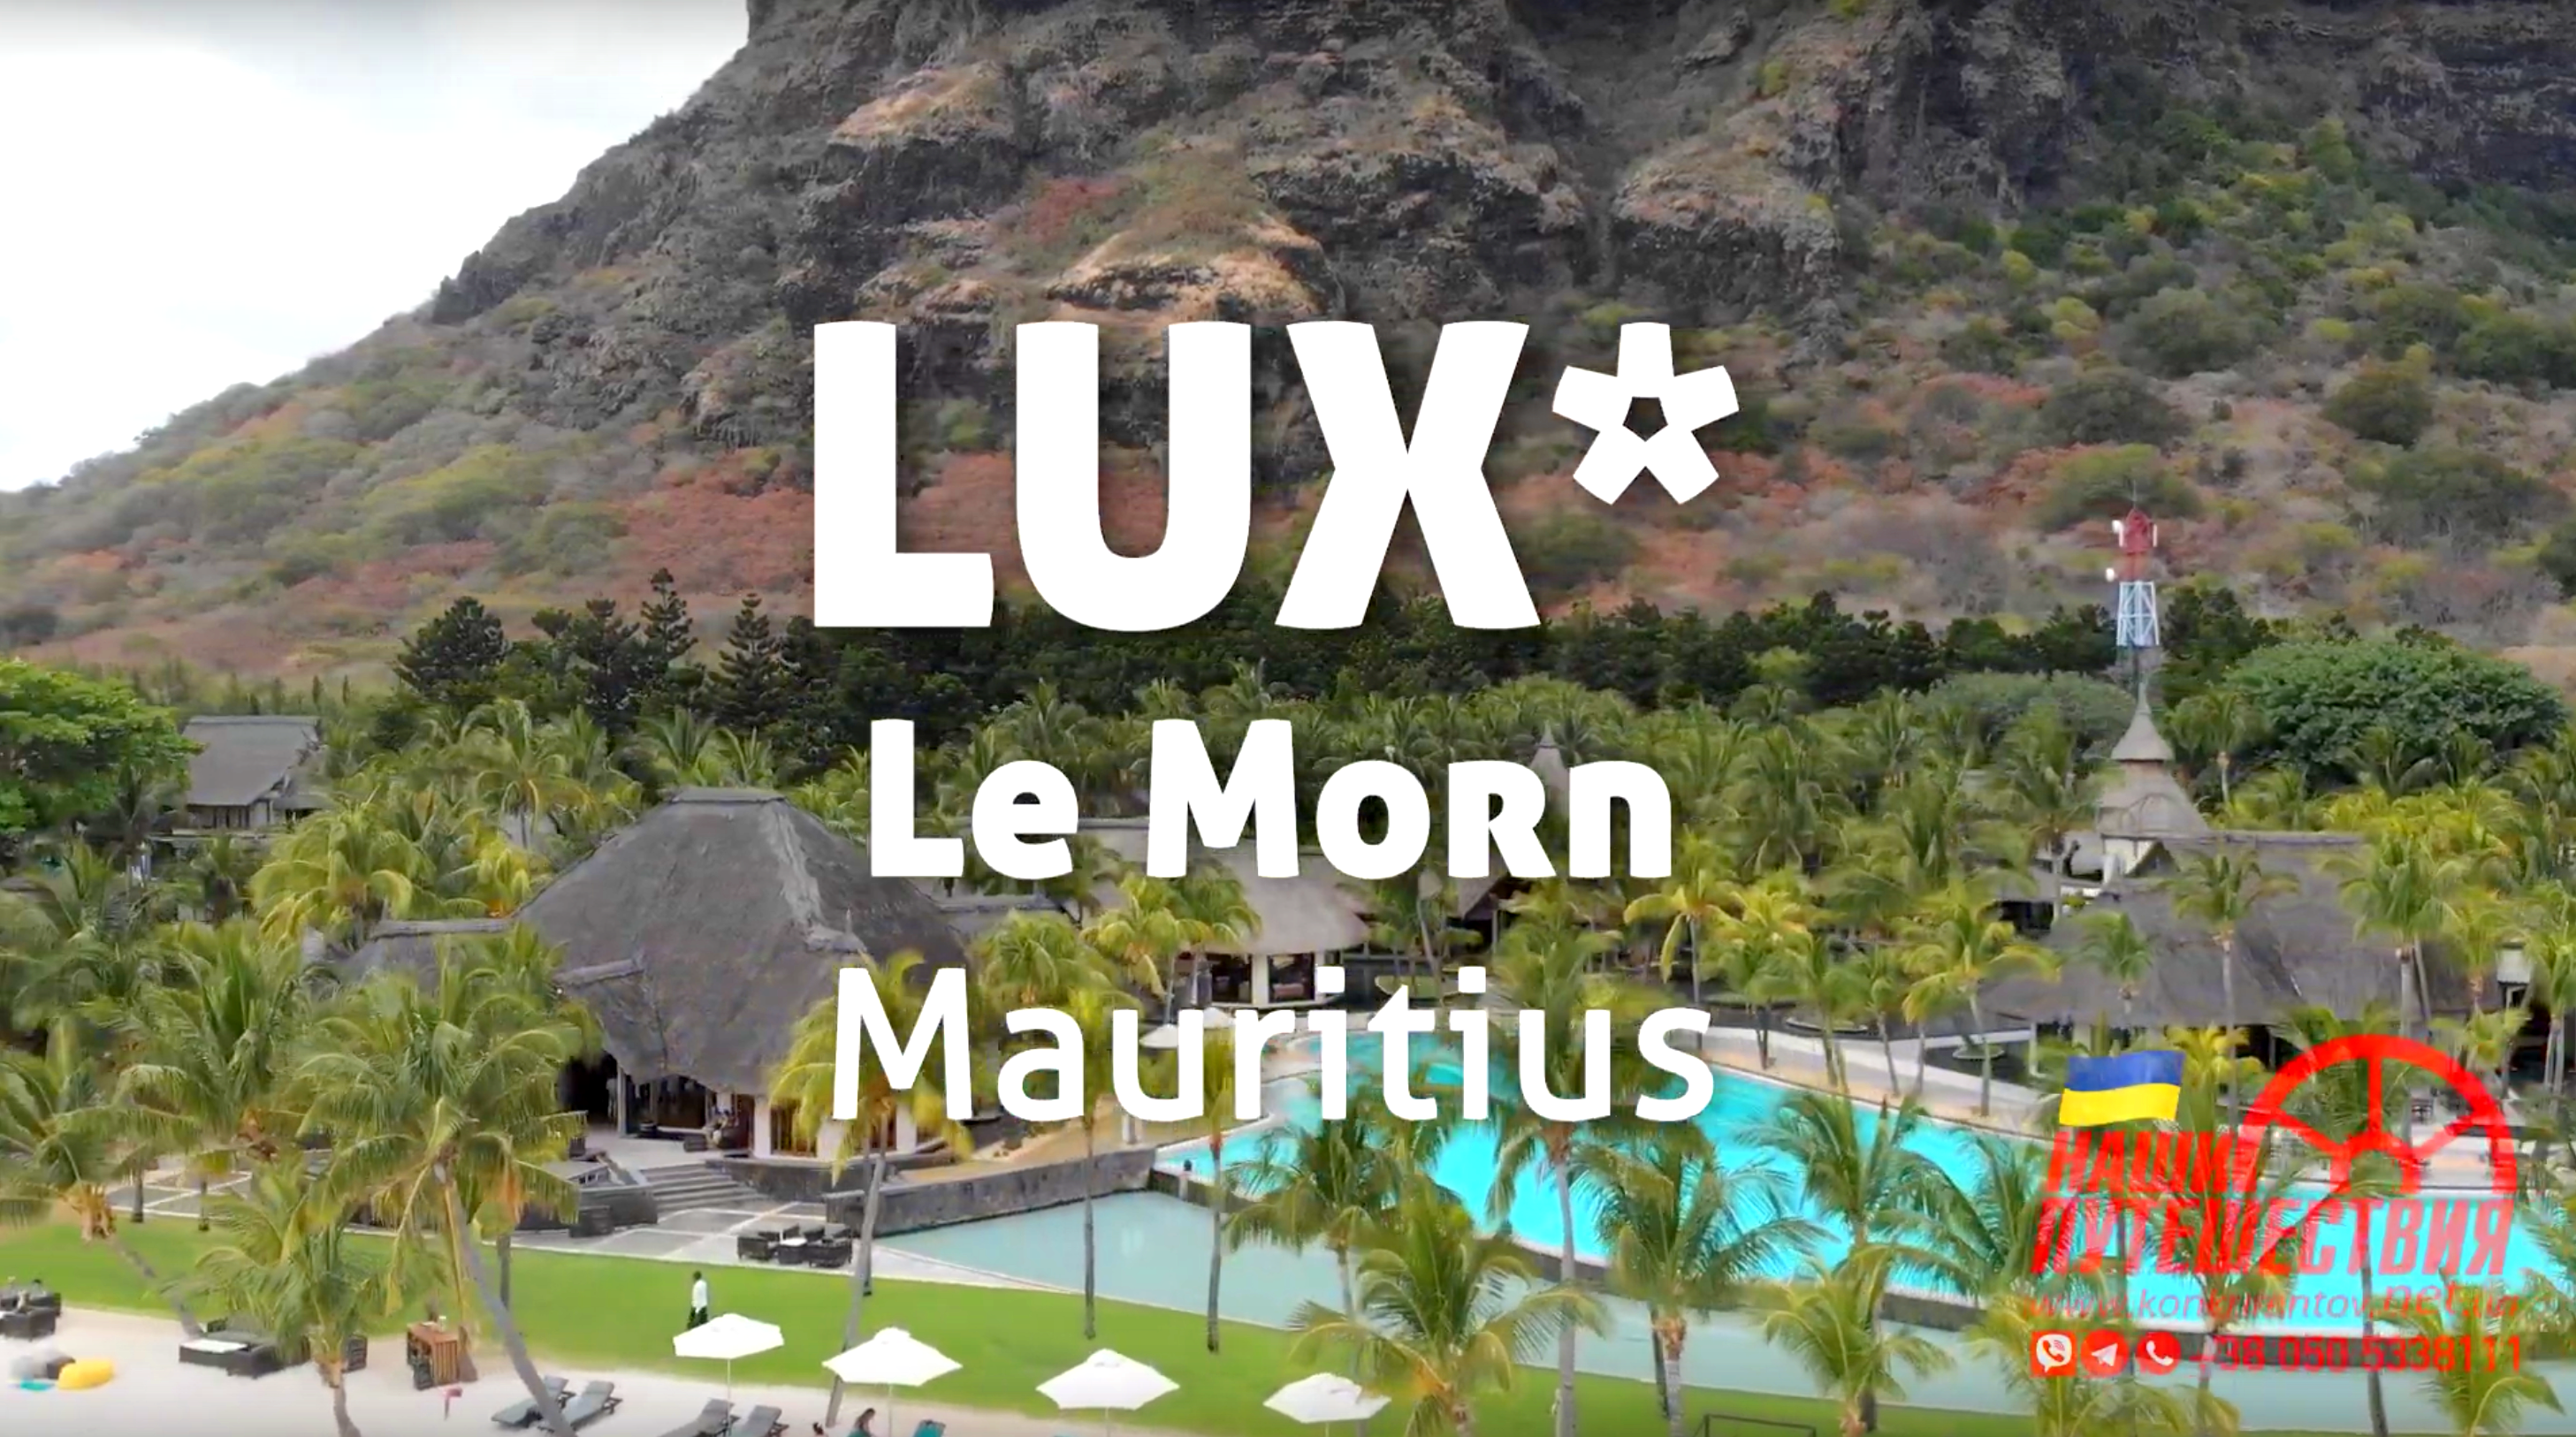 LUX* LE MORNE Mauritius